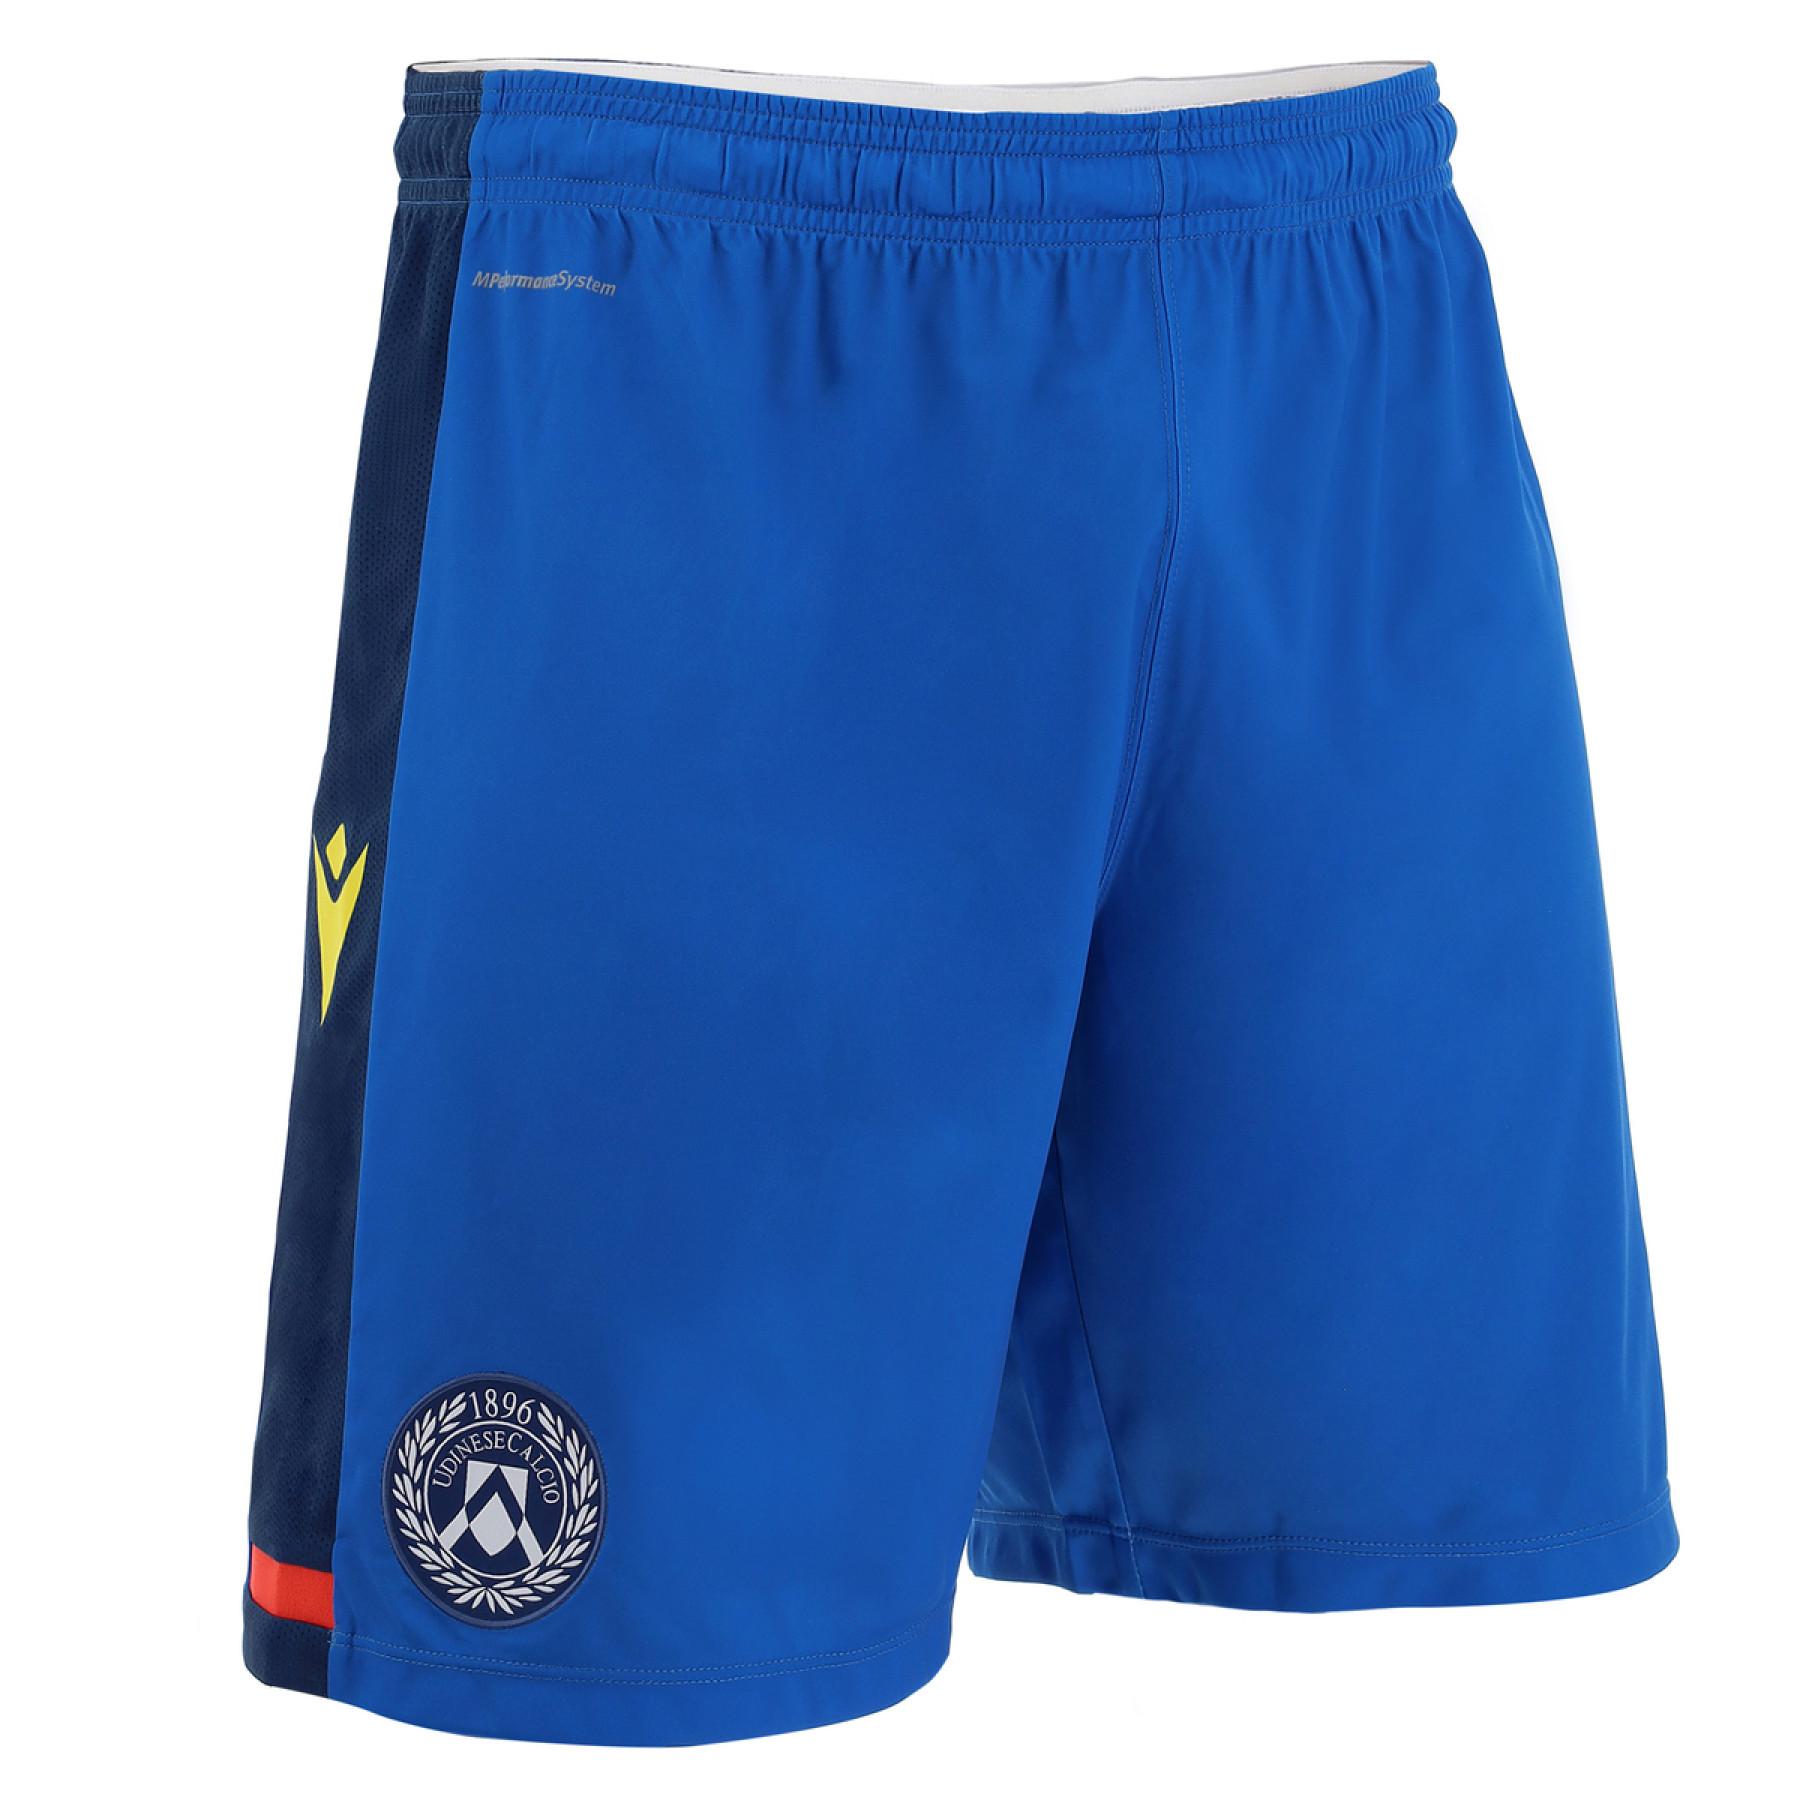 Outdoor-Shorts Udinese calcio 2020/21